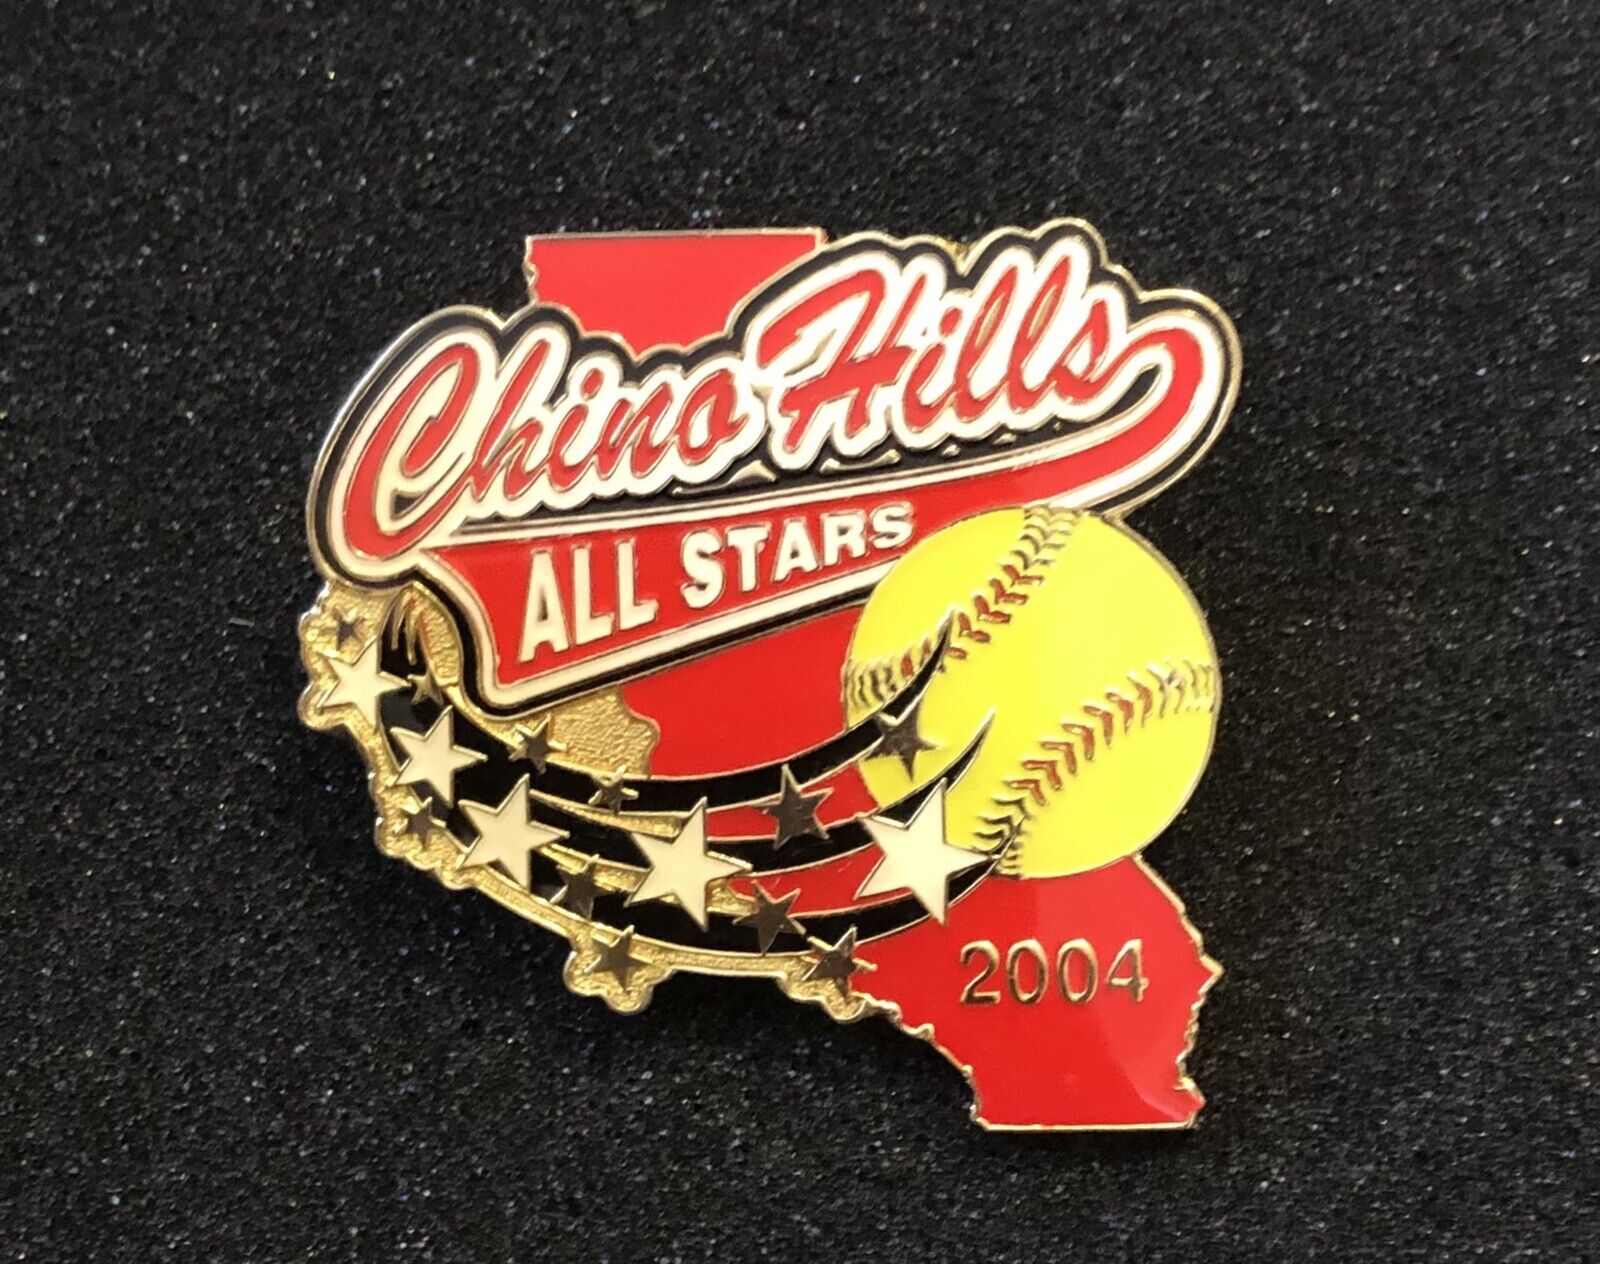 Softball Baseball  Chino Hills All Stars 2004 Pin Pinback